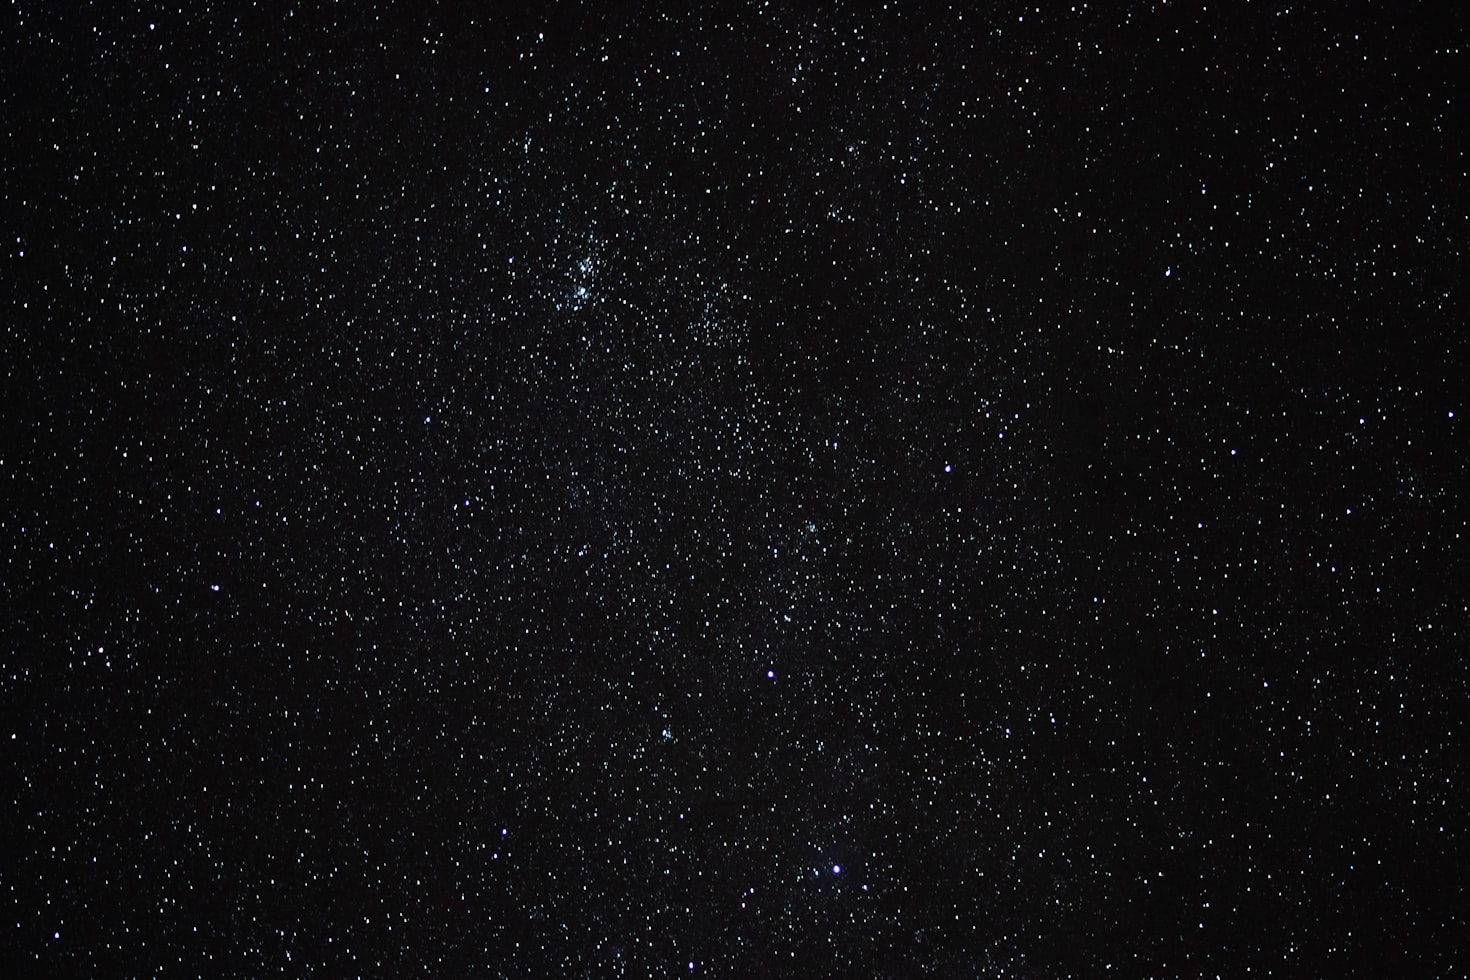 Night sky. Credit: Jack Weirick (@weirick) on Unsplash